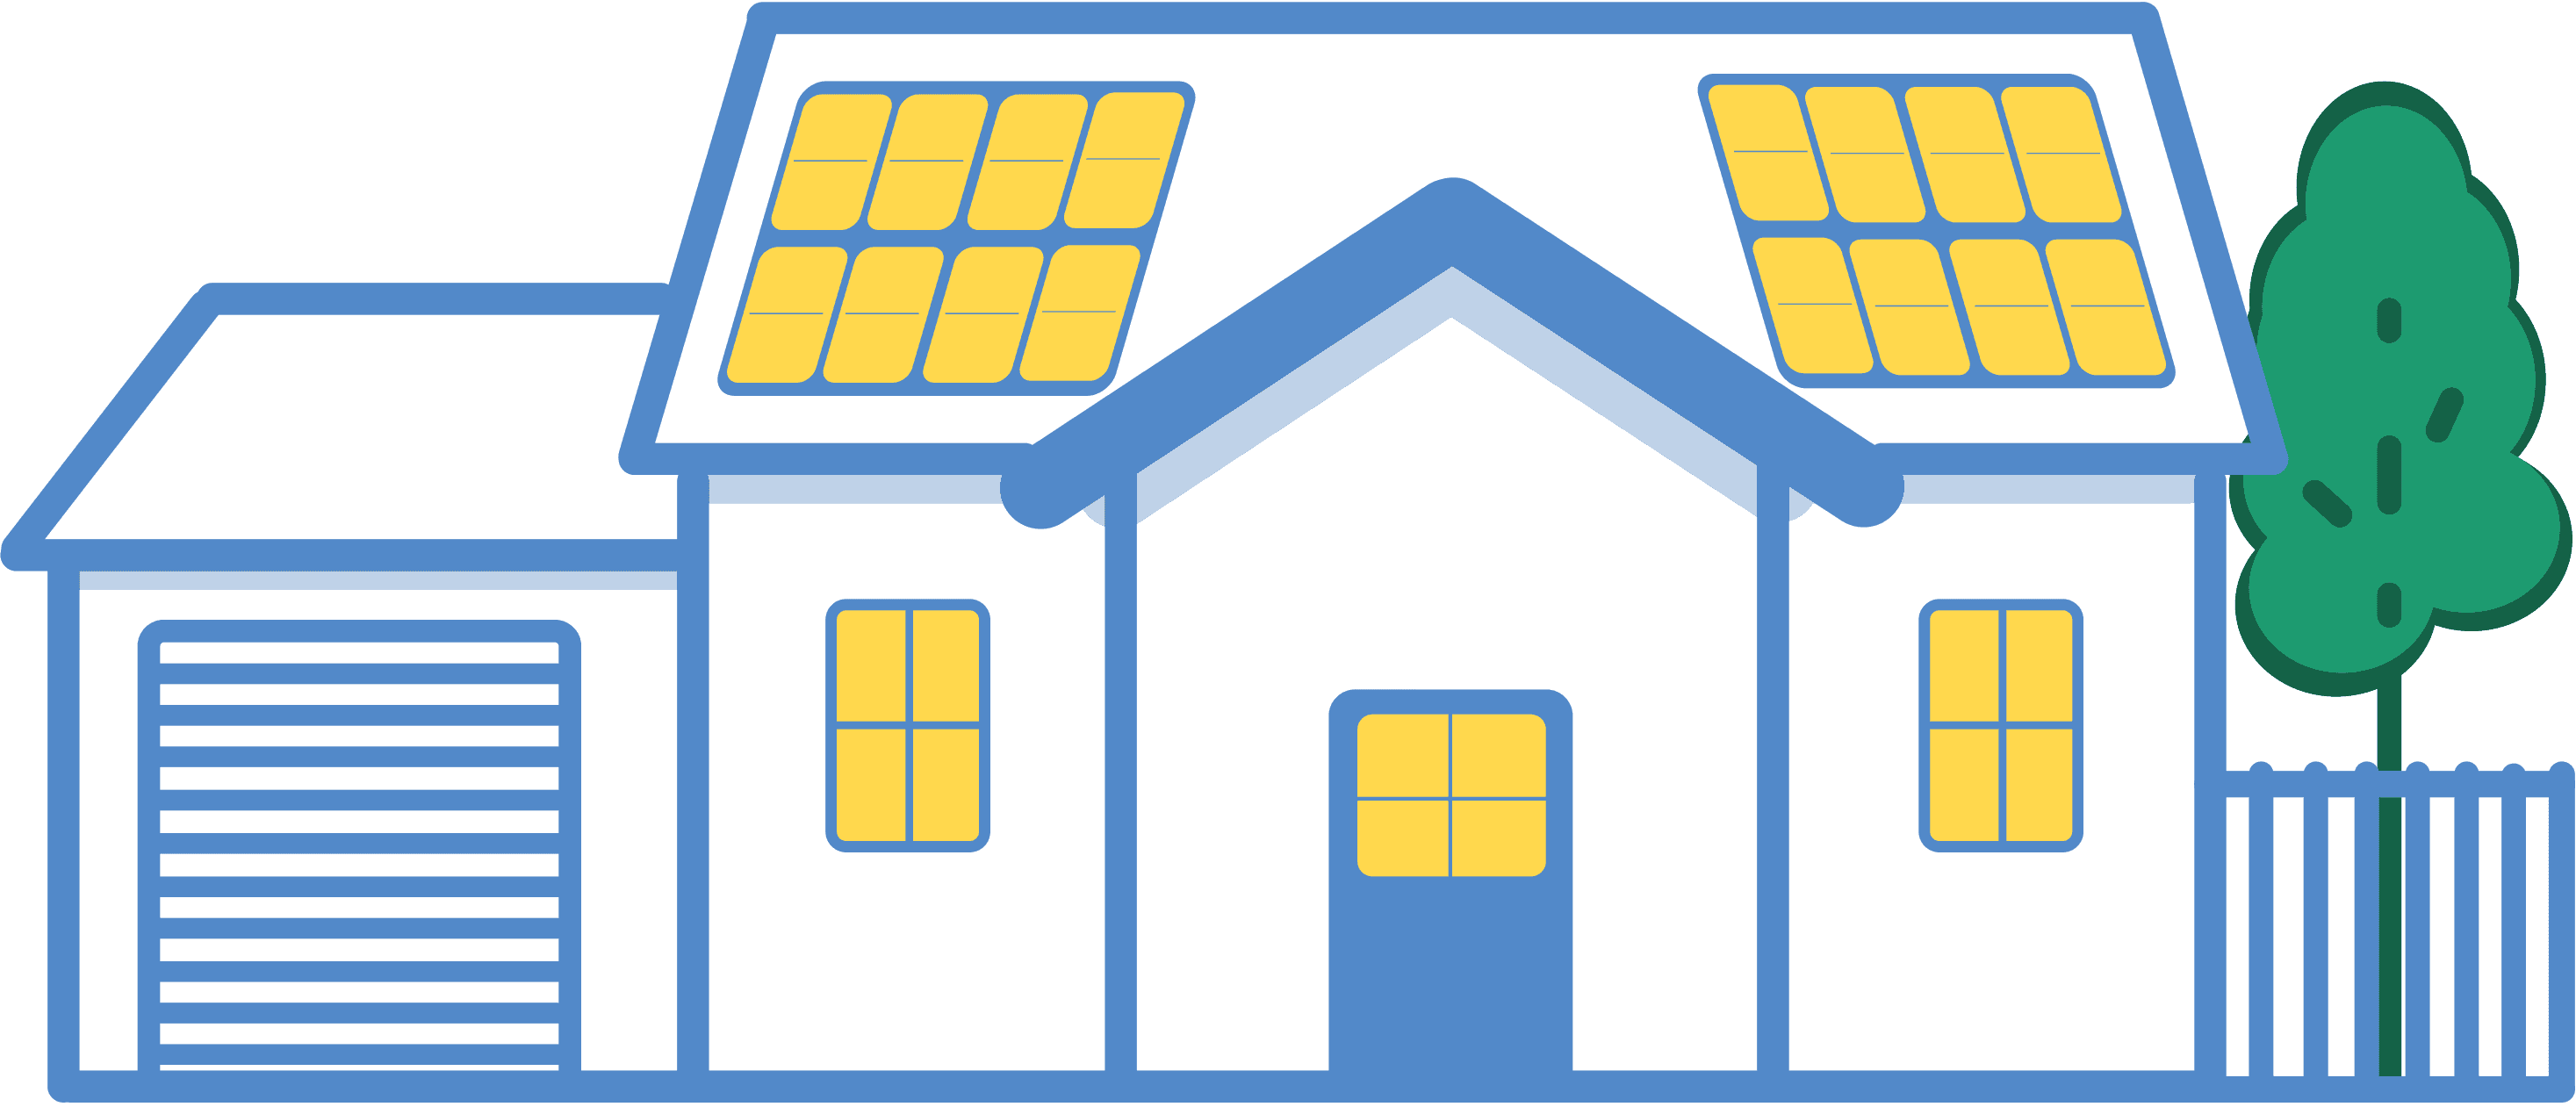 Cartoon Home with solar panels